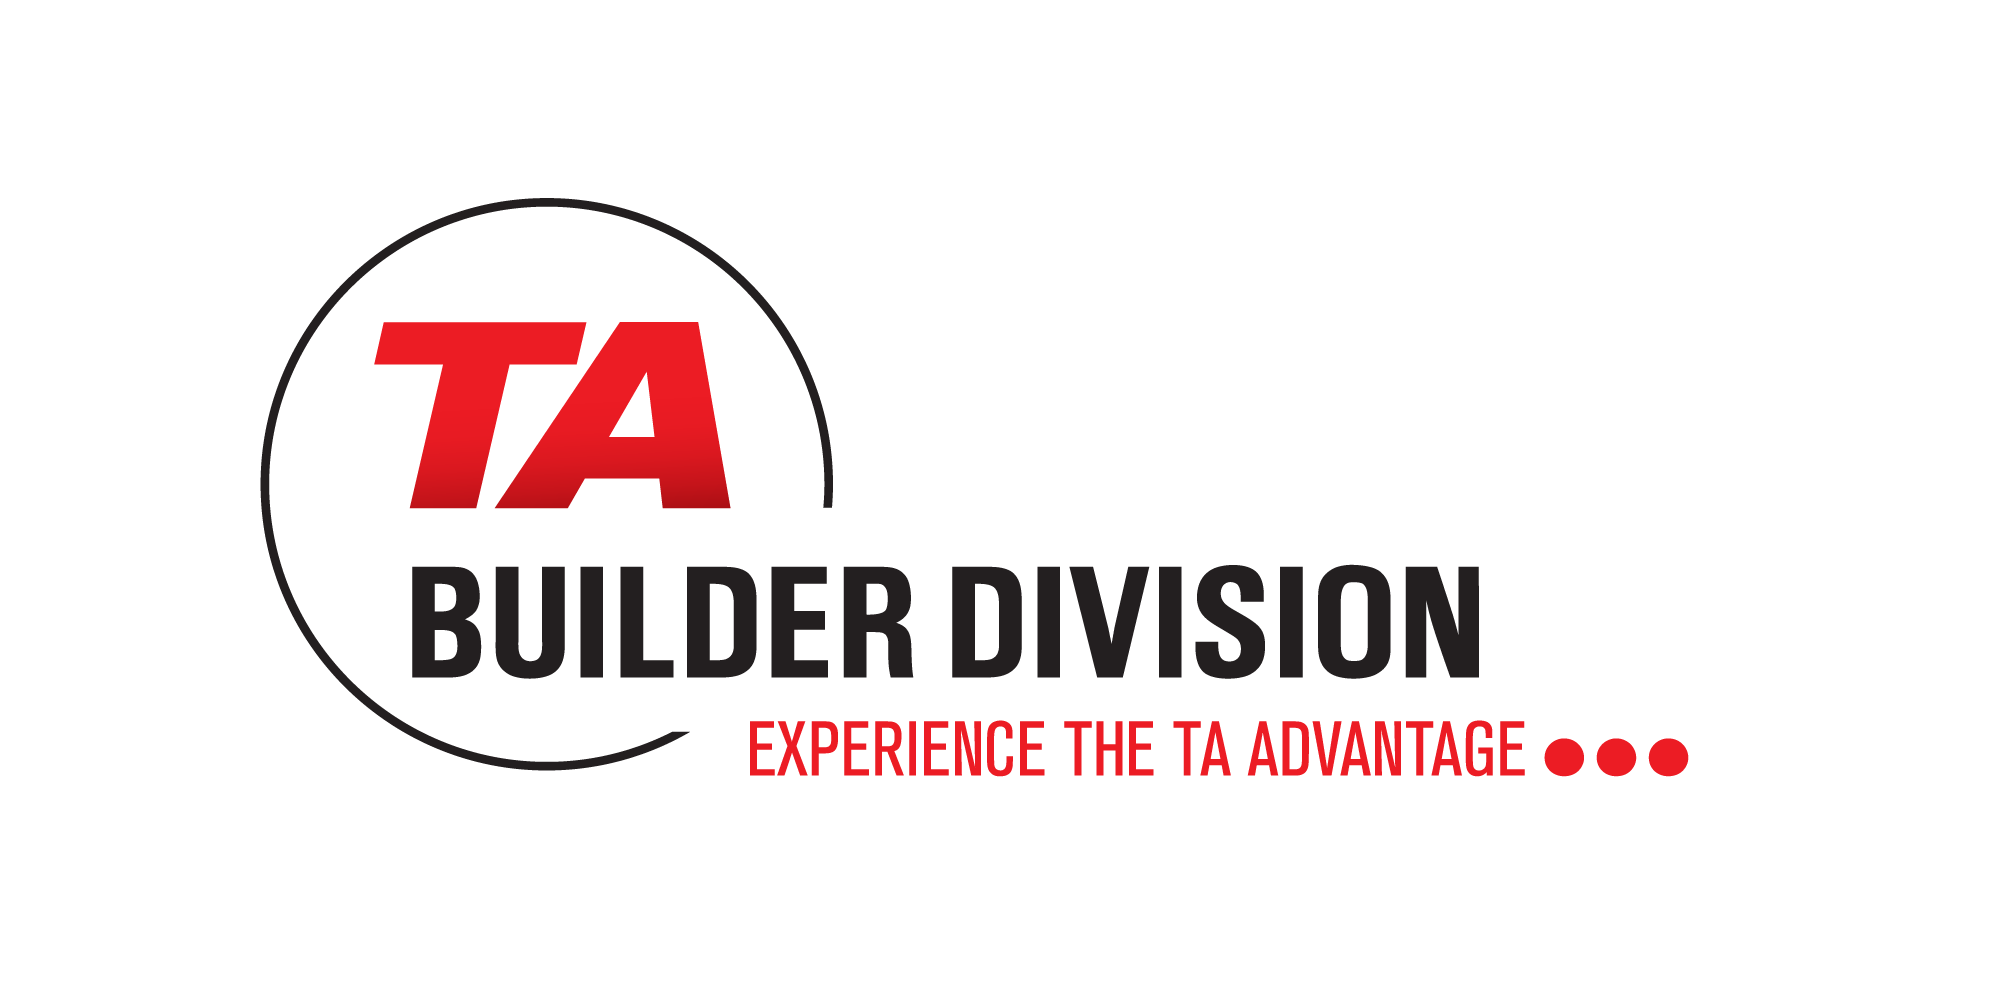 TA Builder Division